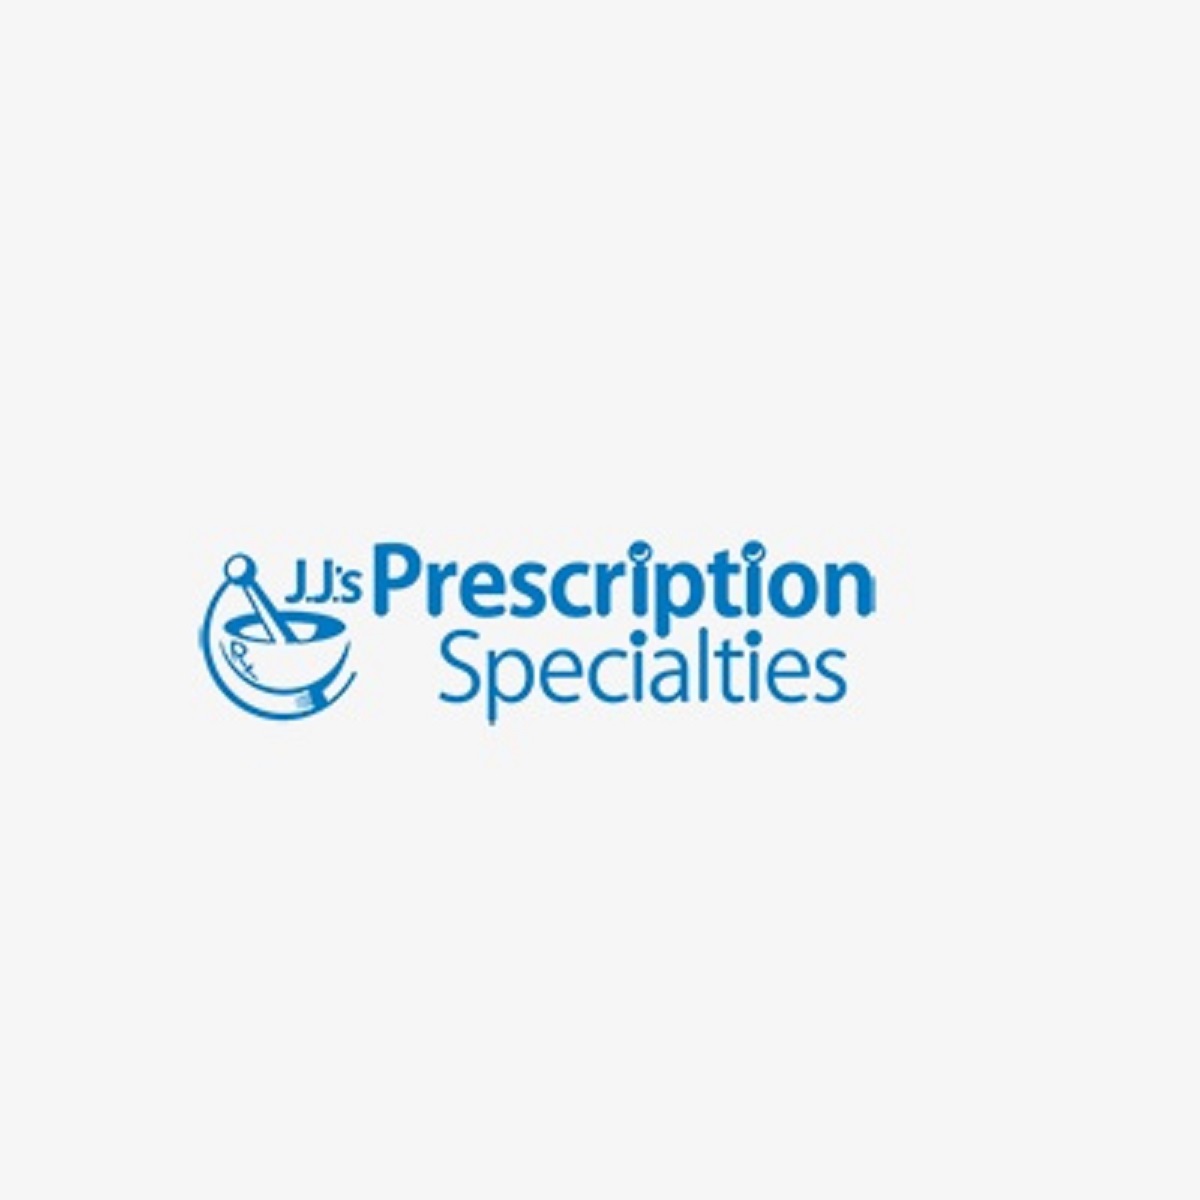 JJs Prescription Specialties Cover Image